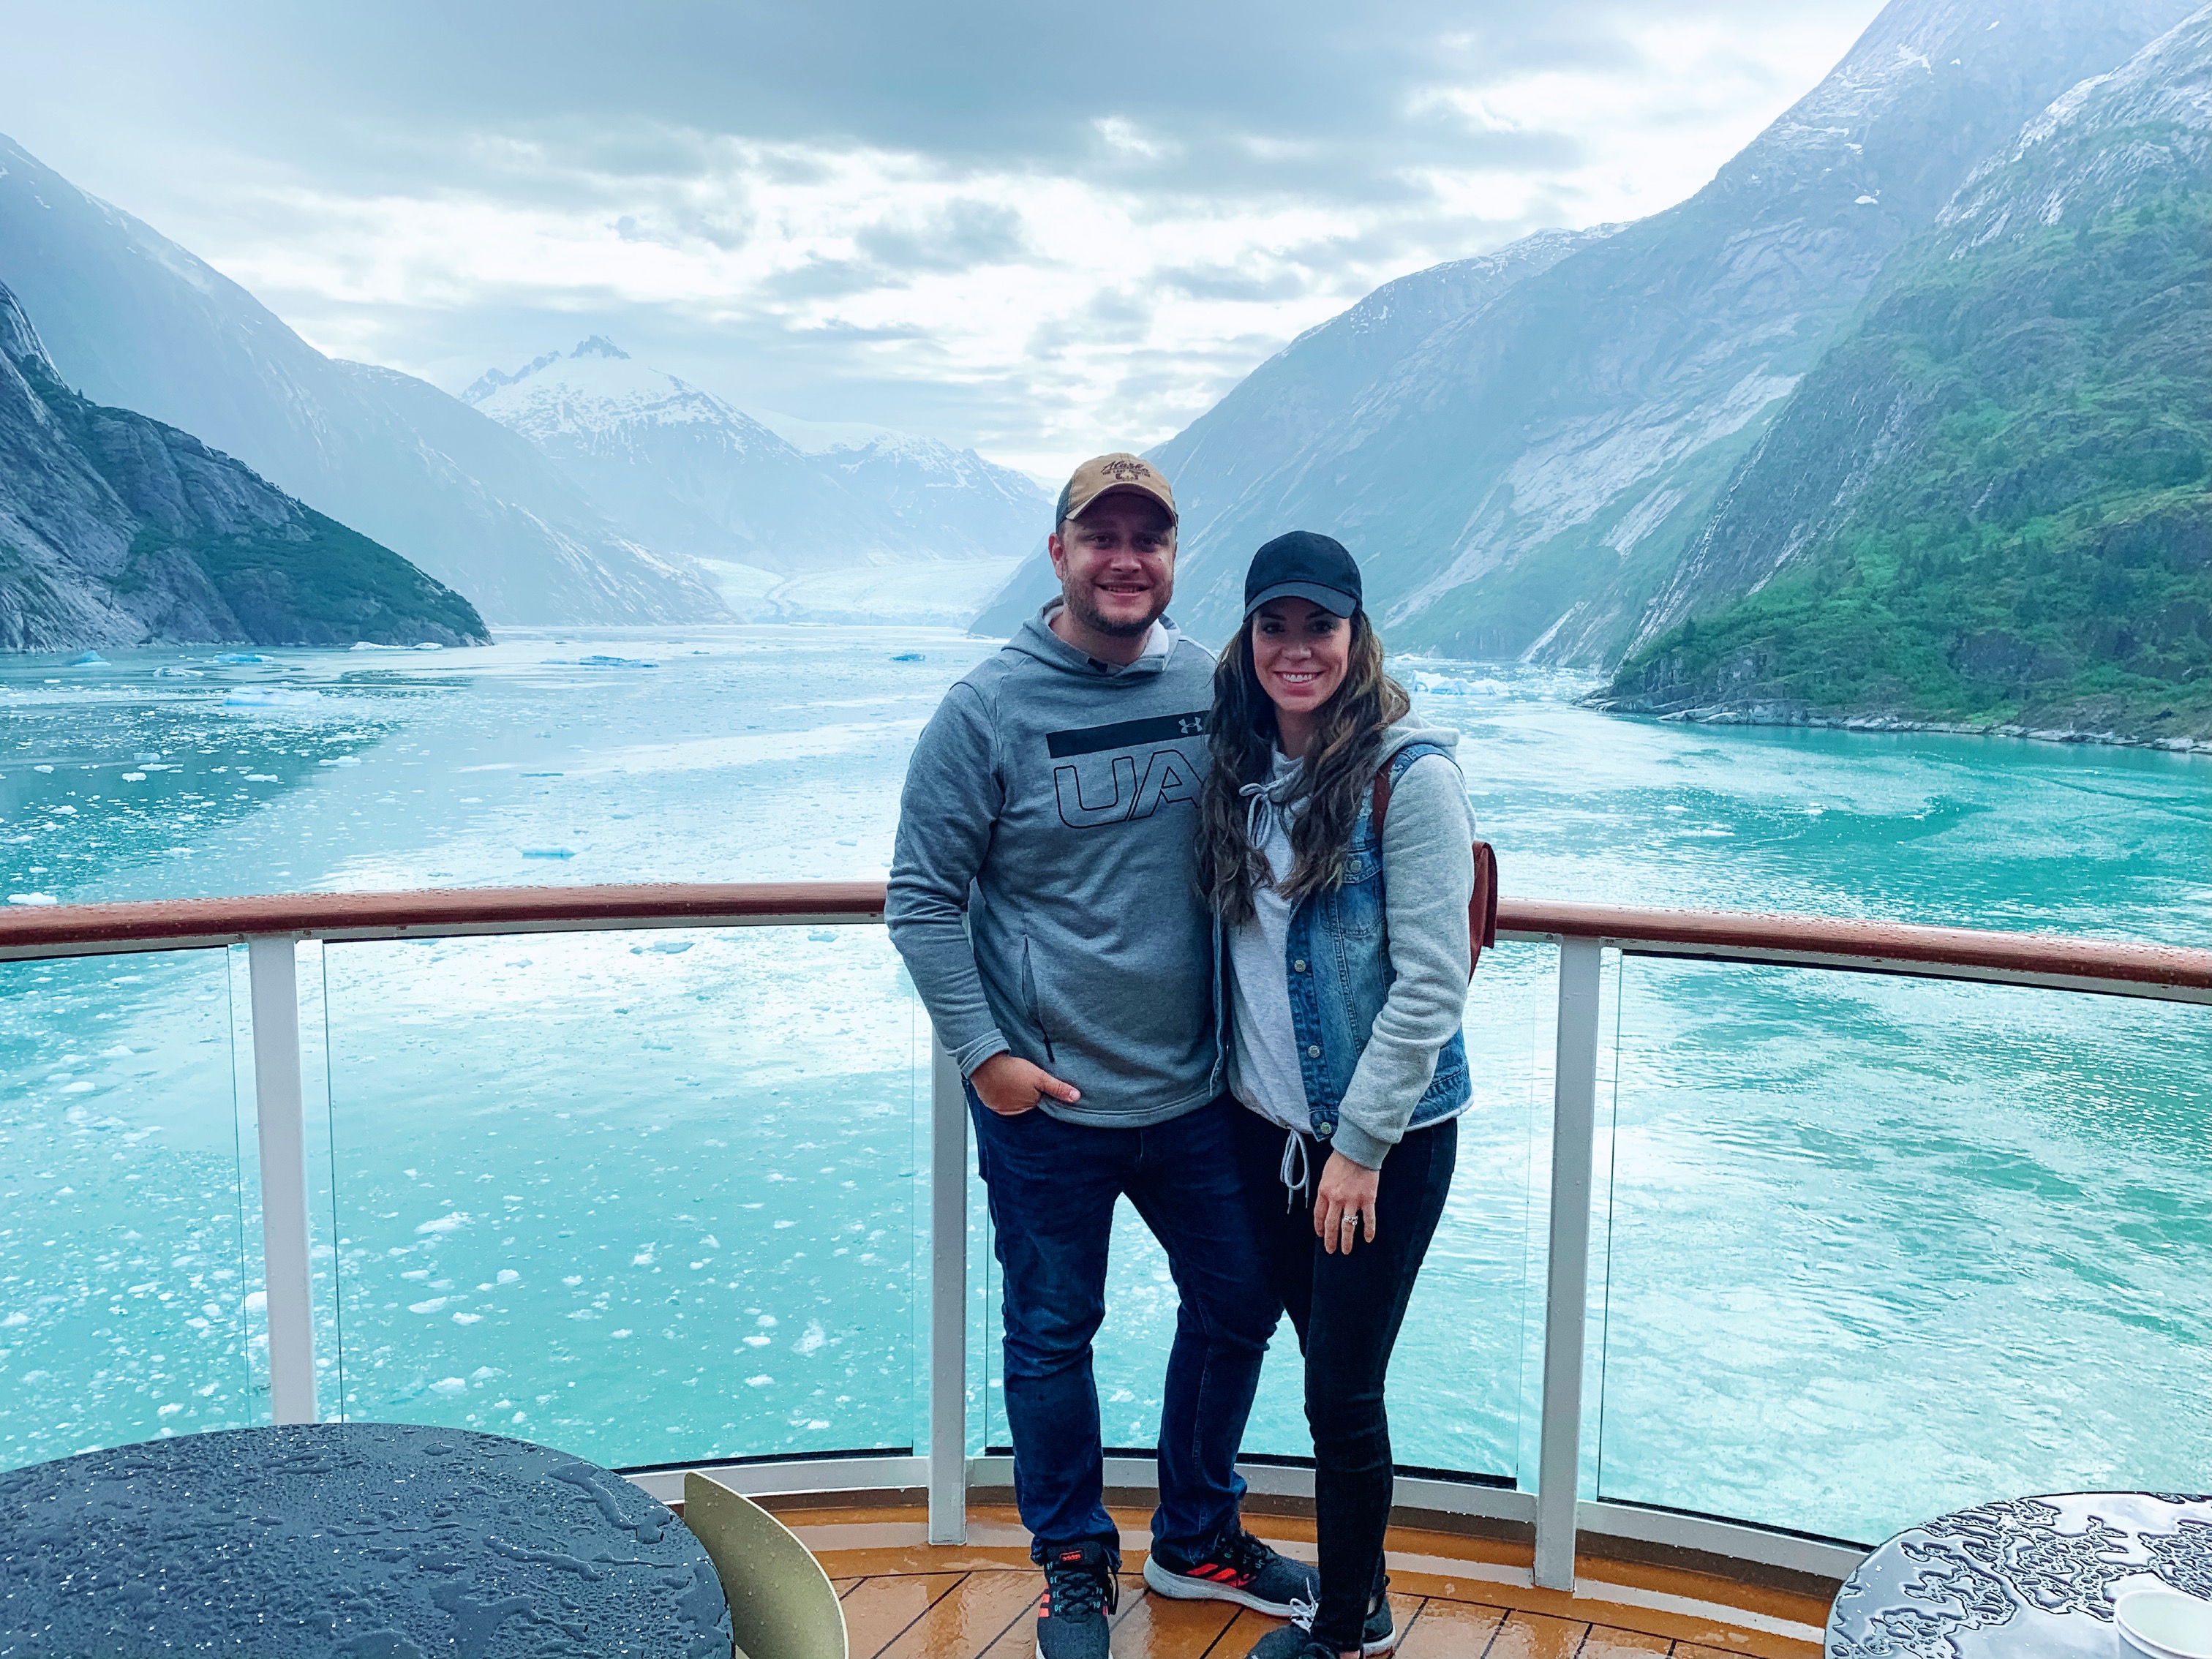 Our Royal Caribbean Alaskan Cruise Full Trip Experience! At Home